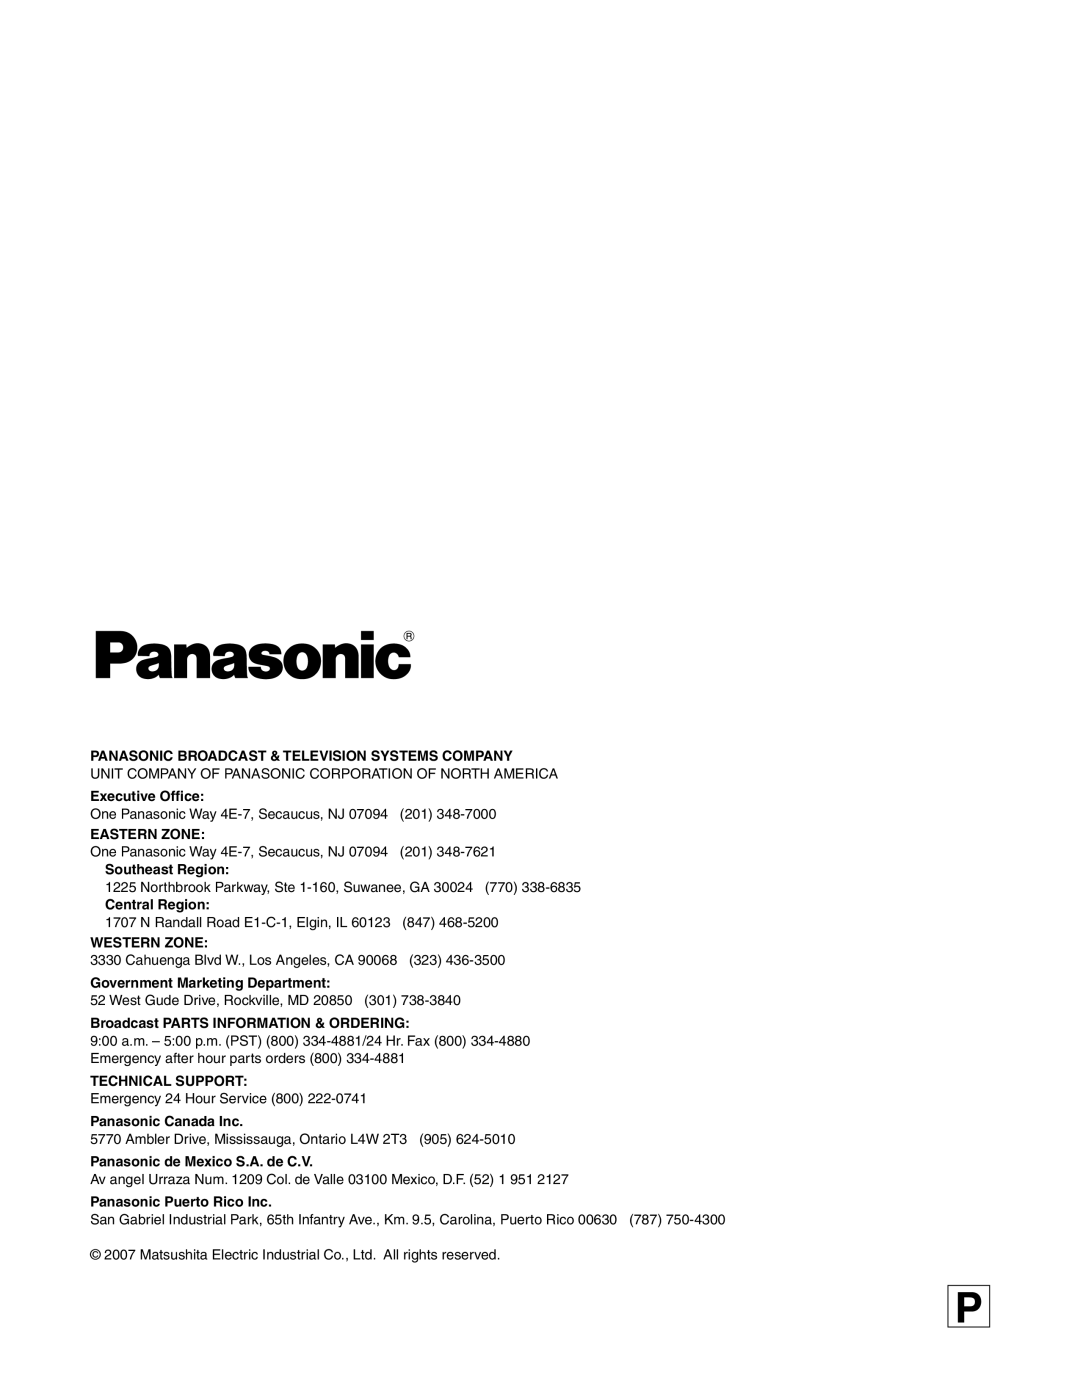 Panasonic AW-PH405N Panasonic Broadcast & Television Systems Company, Executive Office, Eastern Zone, Southeast Region 